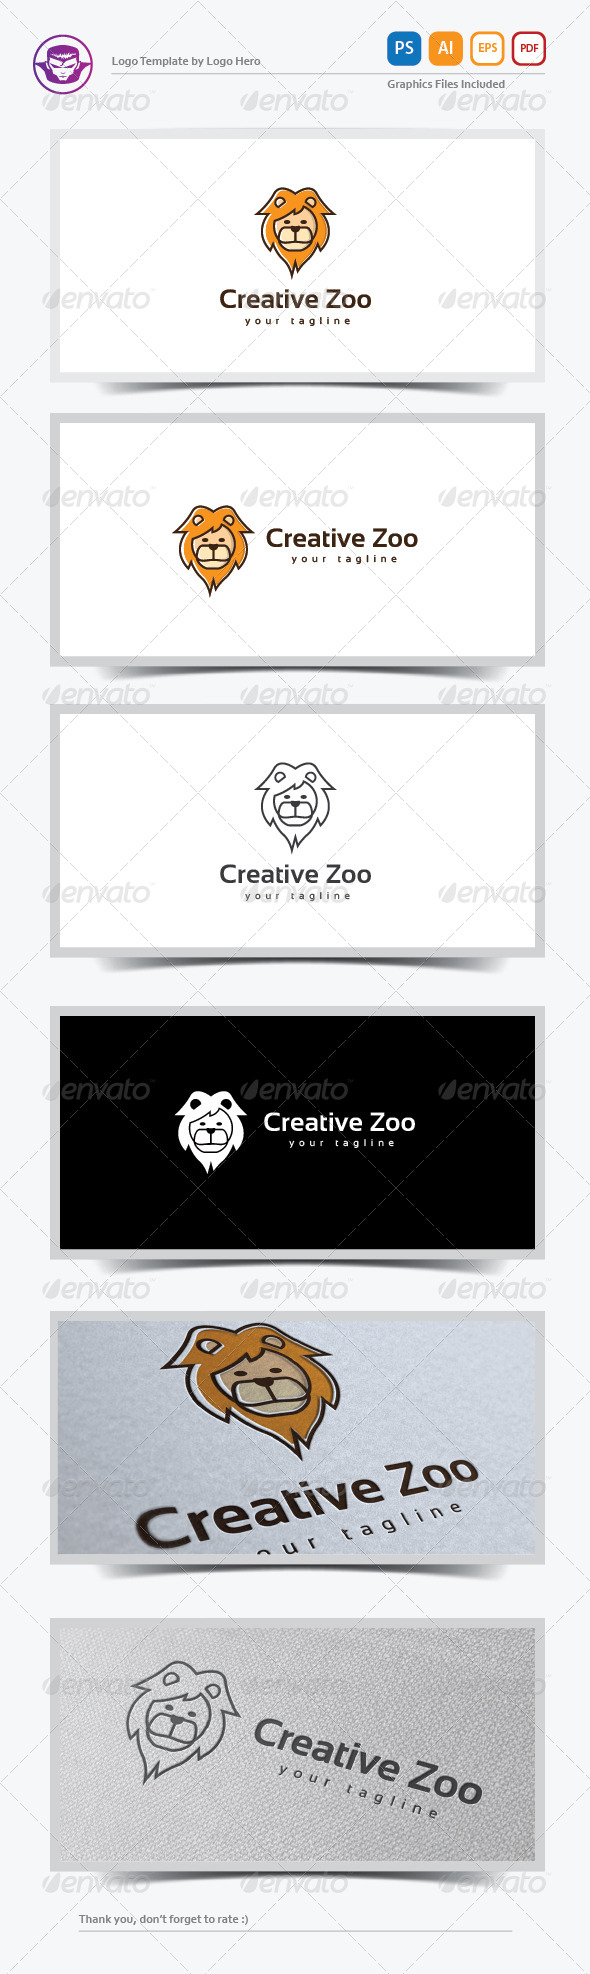 Creative Zoo Logo Template